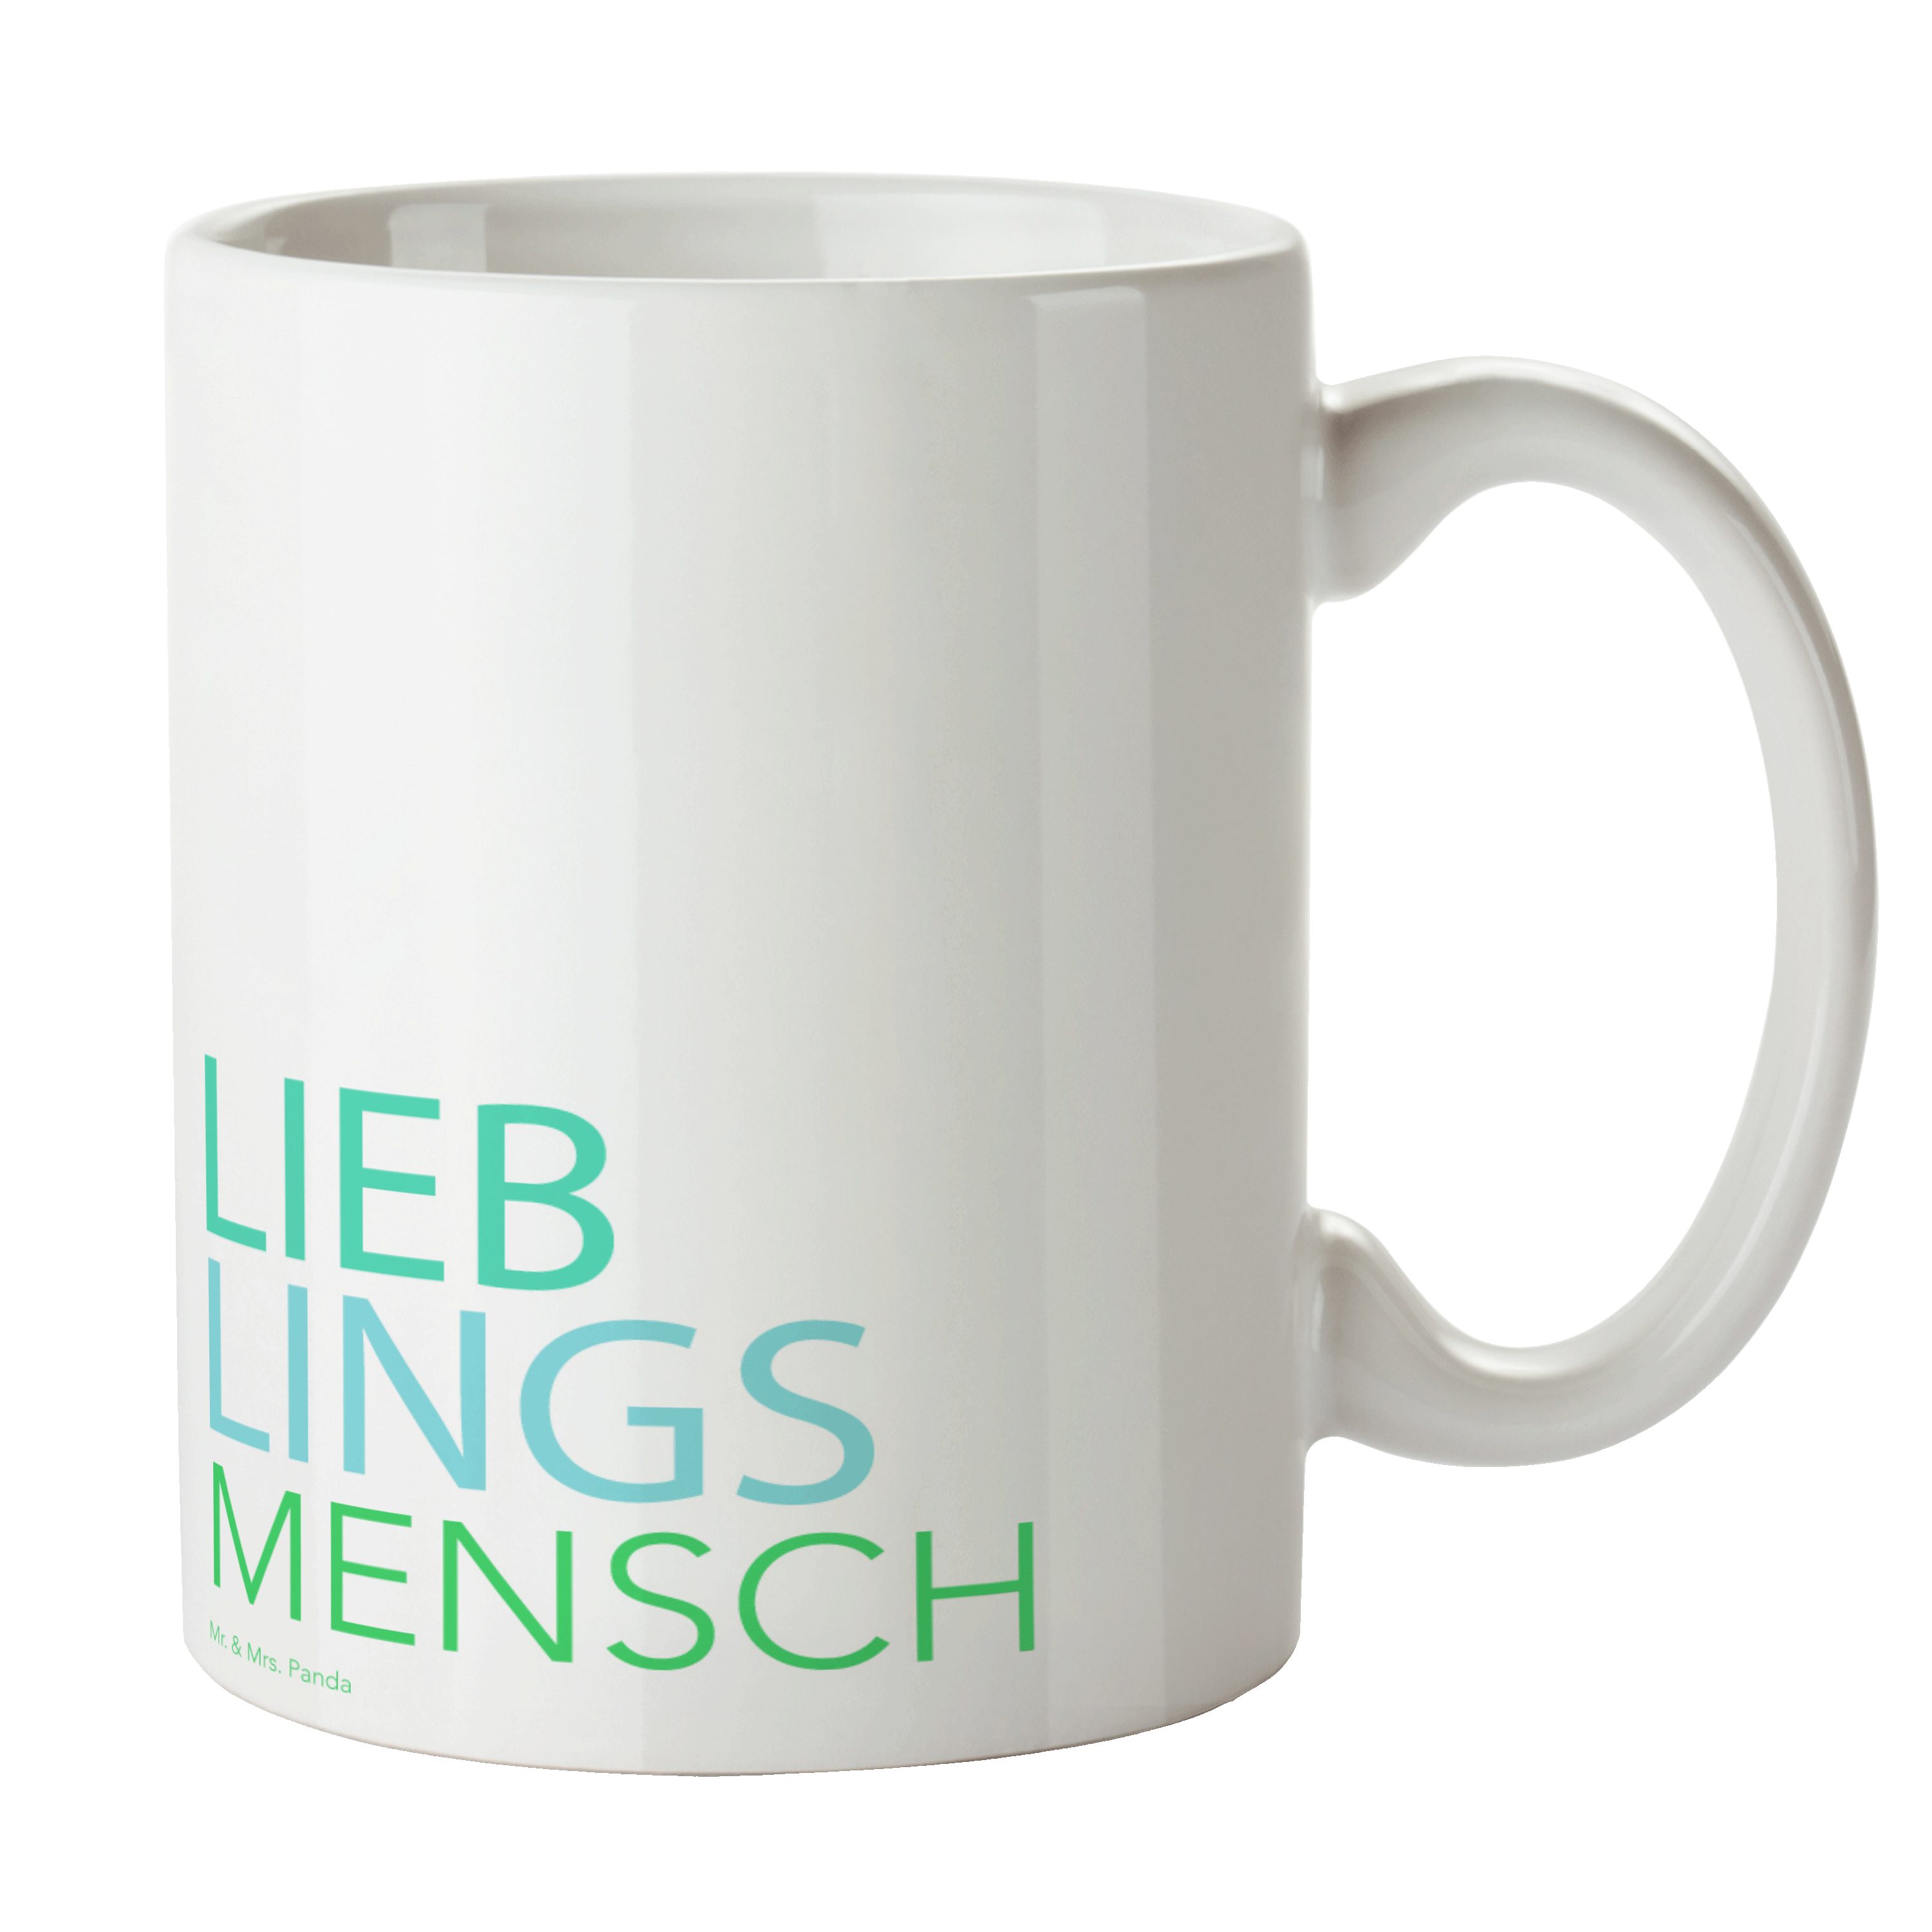 Mrs. Mensch Mensch, & Weiß Geschenk, Liebe, Keramik Panda Tasse Mr. Spruch, - - Teetasse, Lieblings